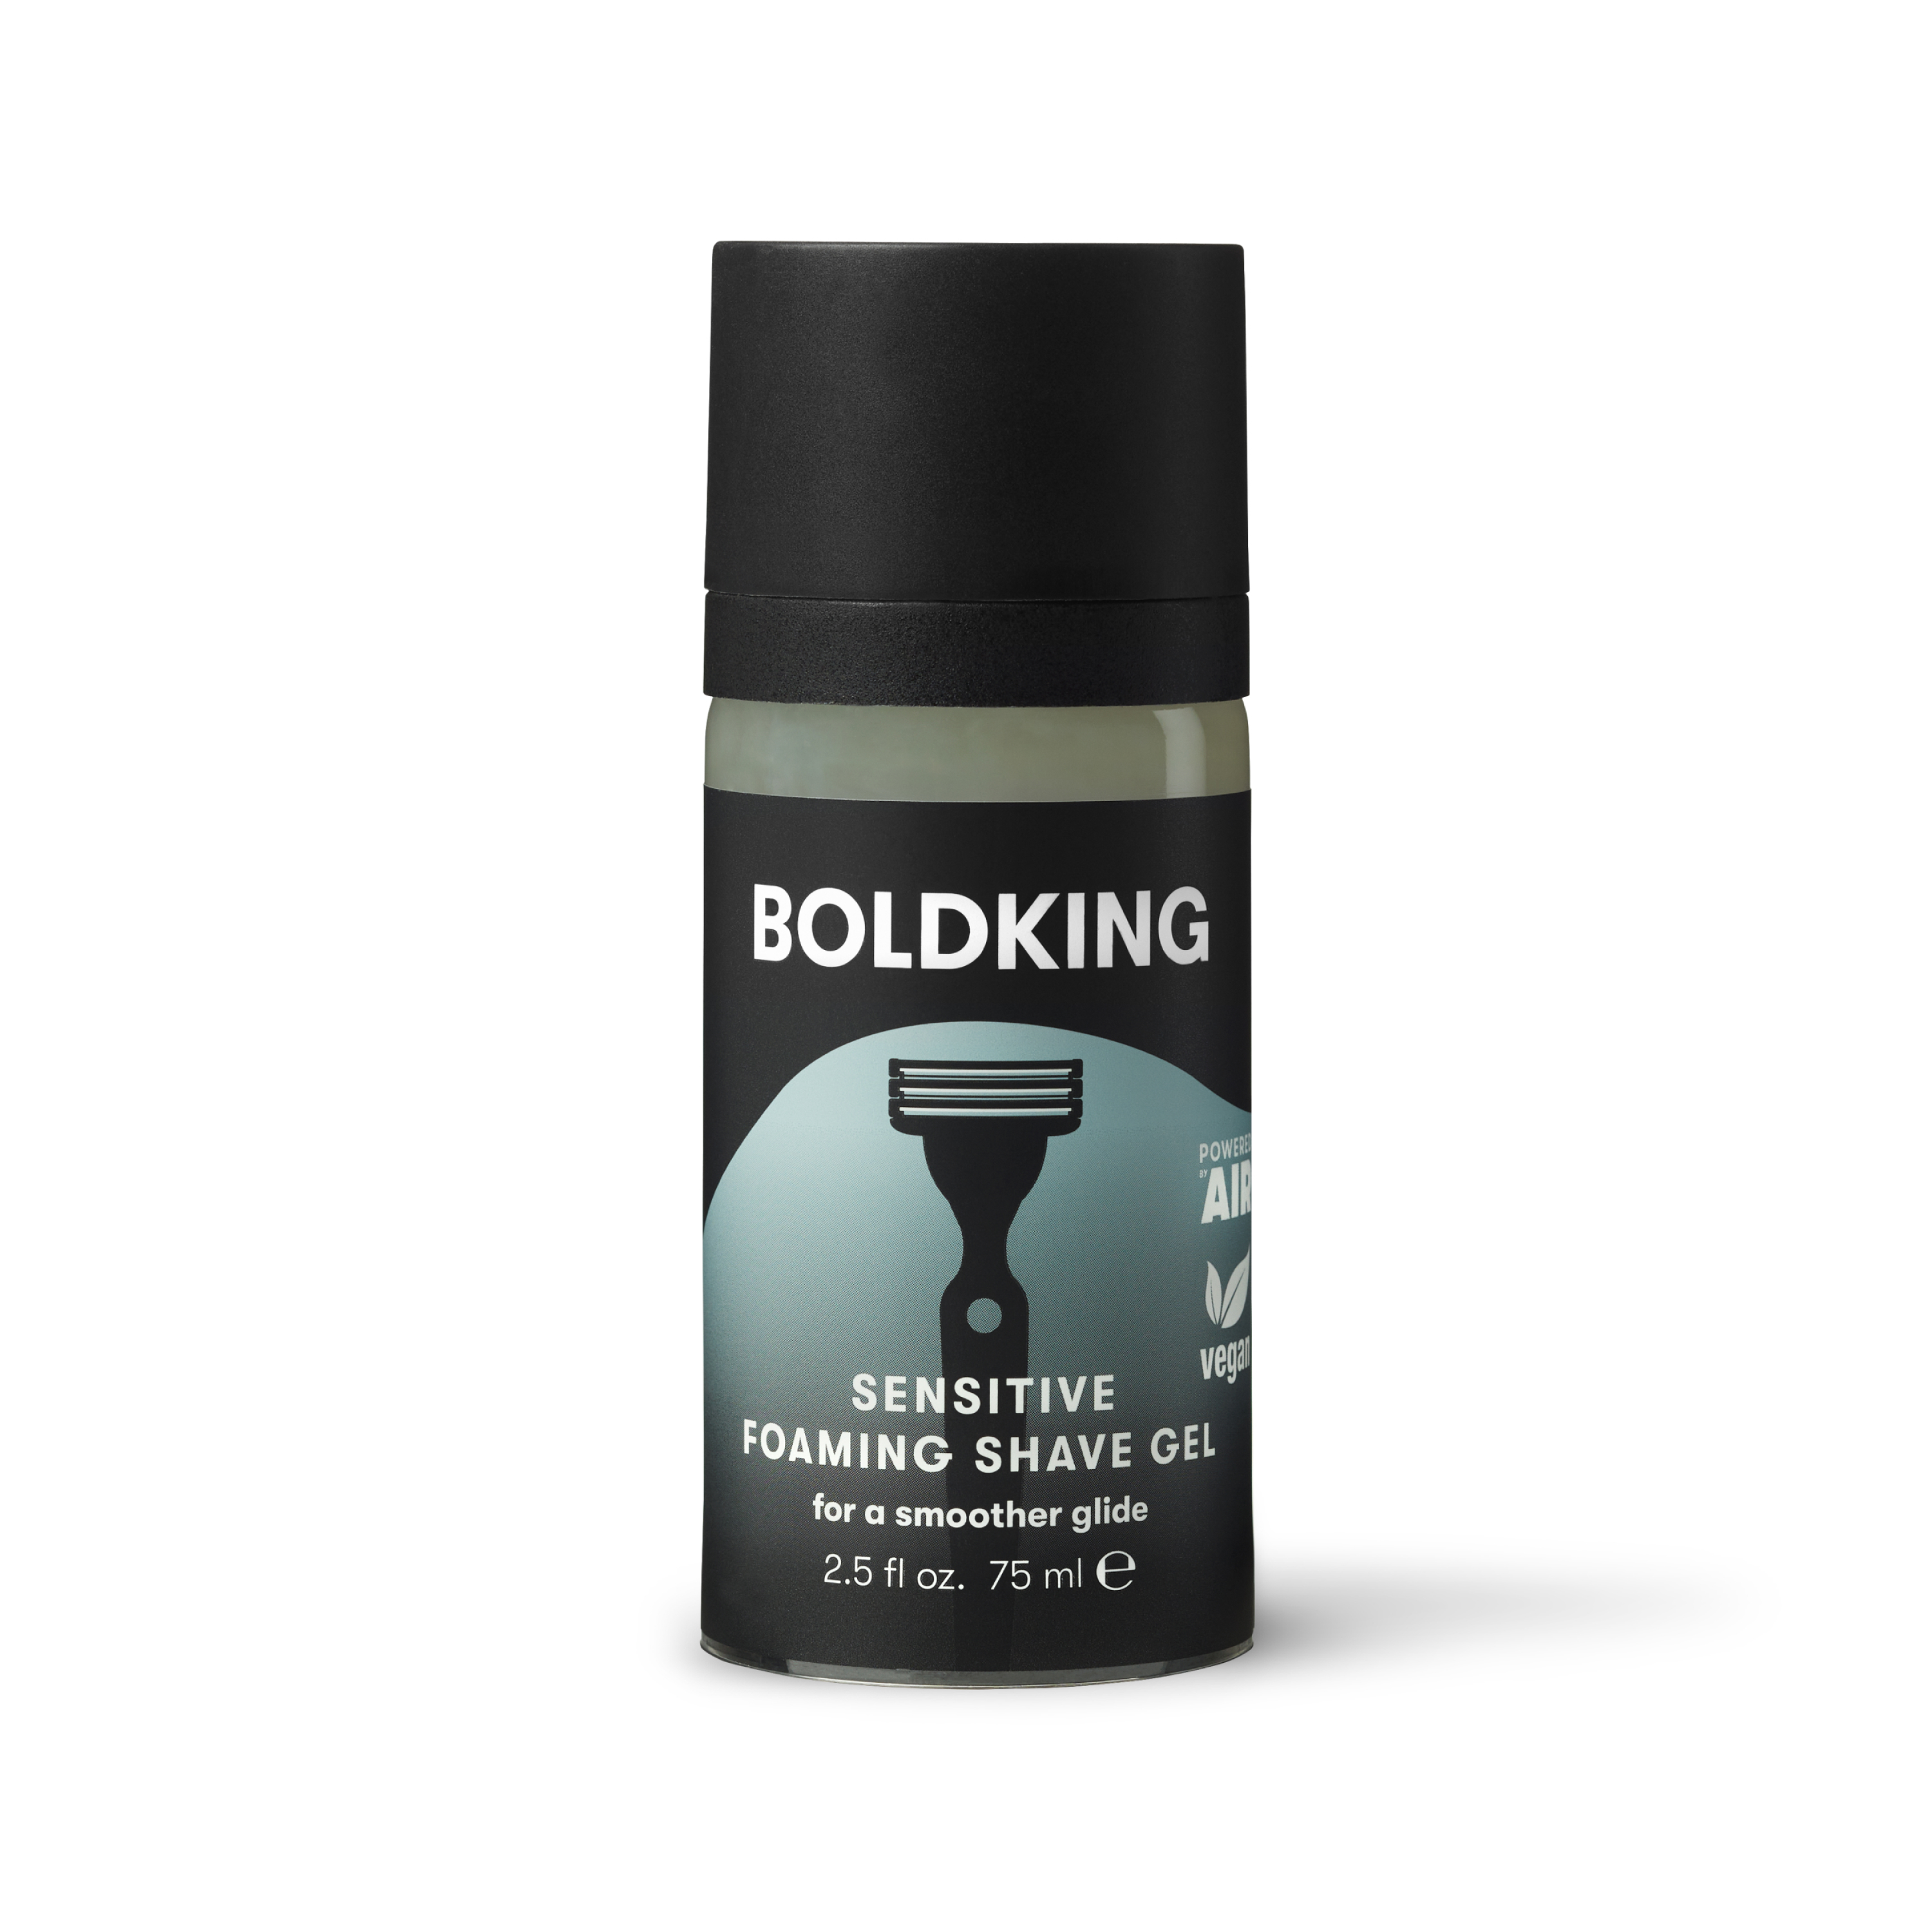 Boldking Foaming Shave Gel 75ml Sensitive